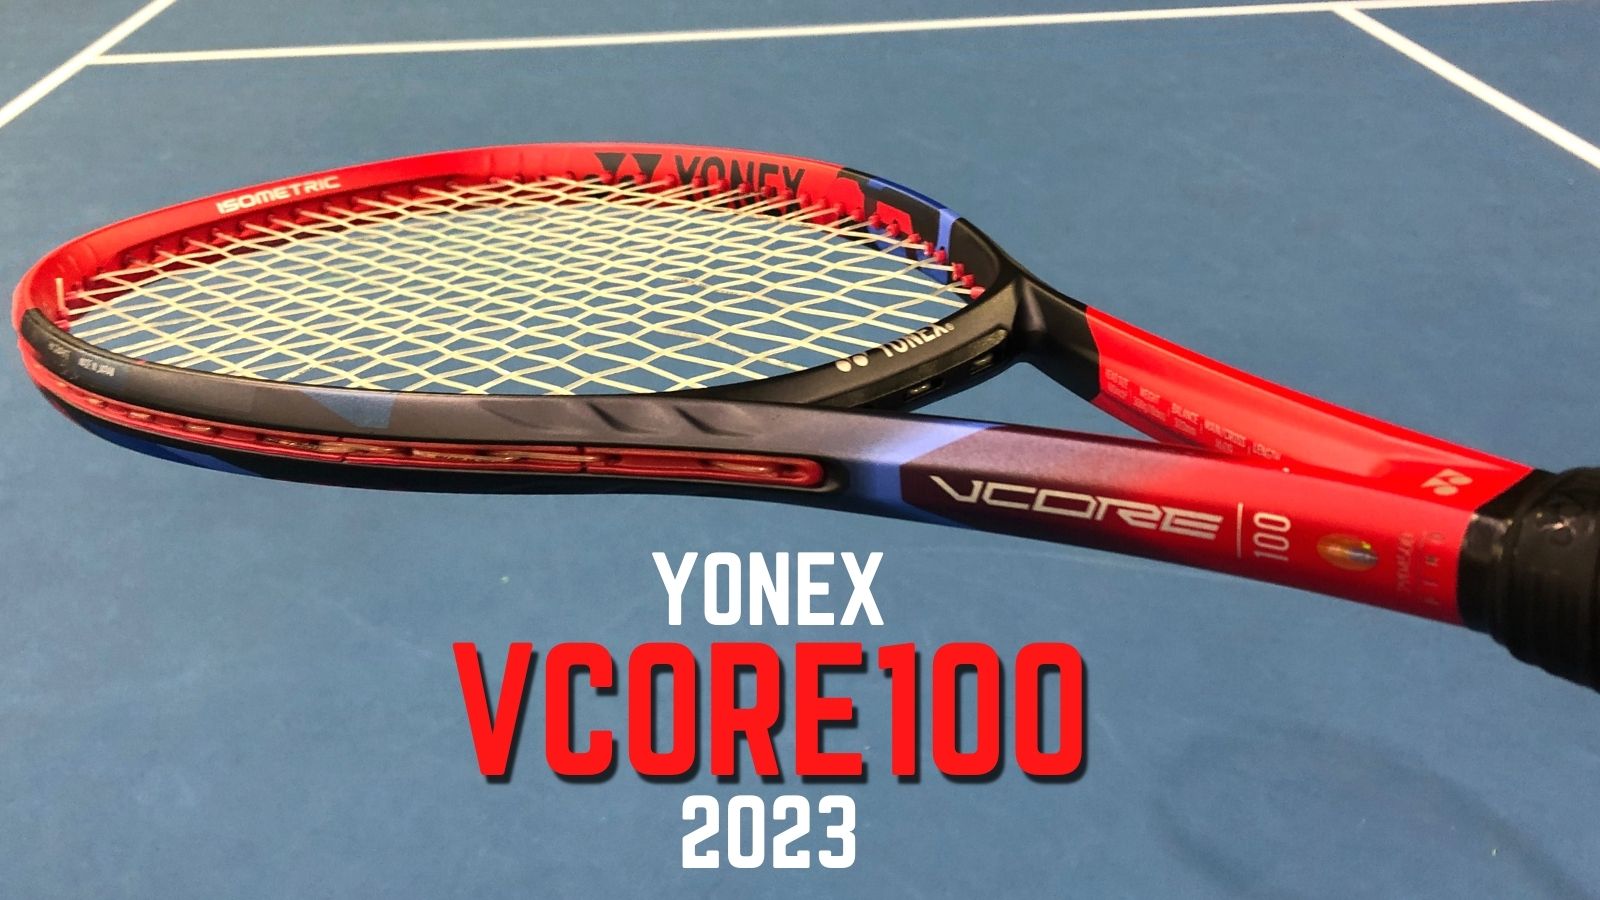 VCORE100 2023年モデル(YONEX)は柔らかさとアシストをバランス良く実現